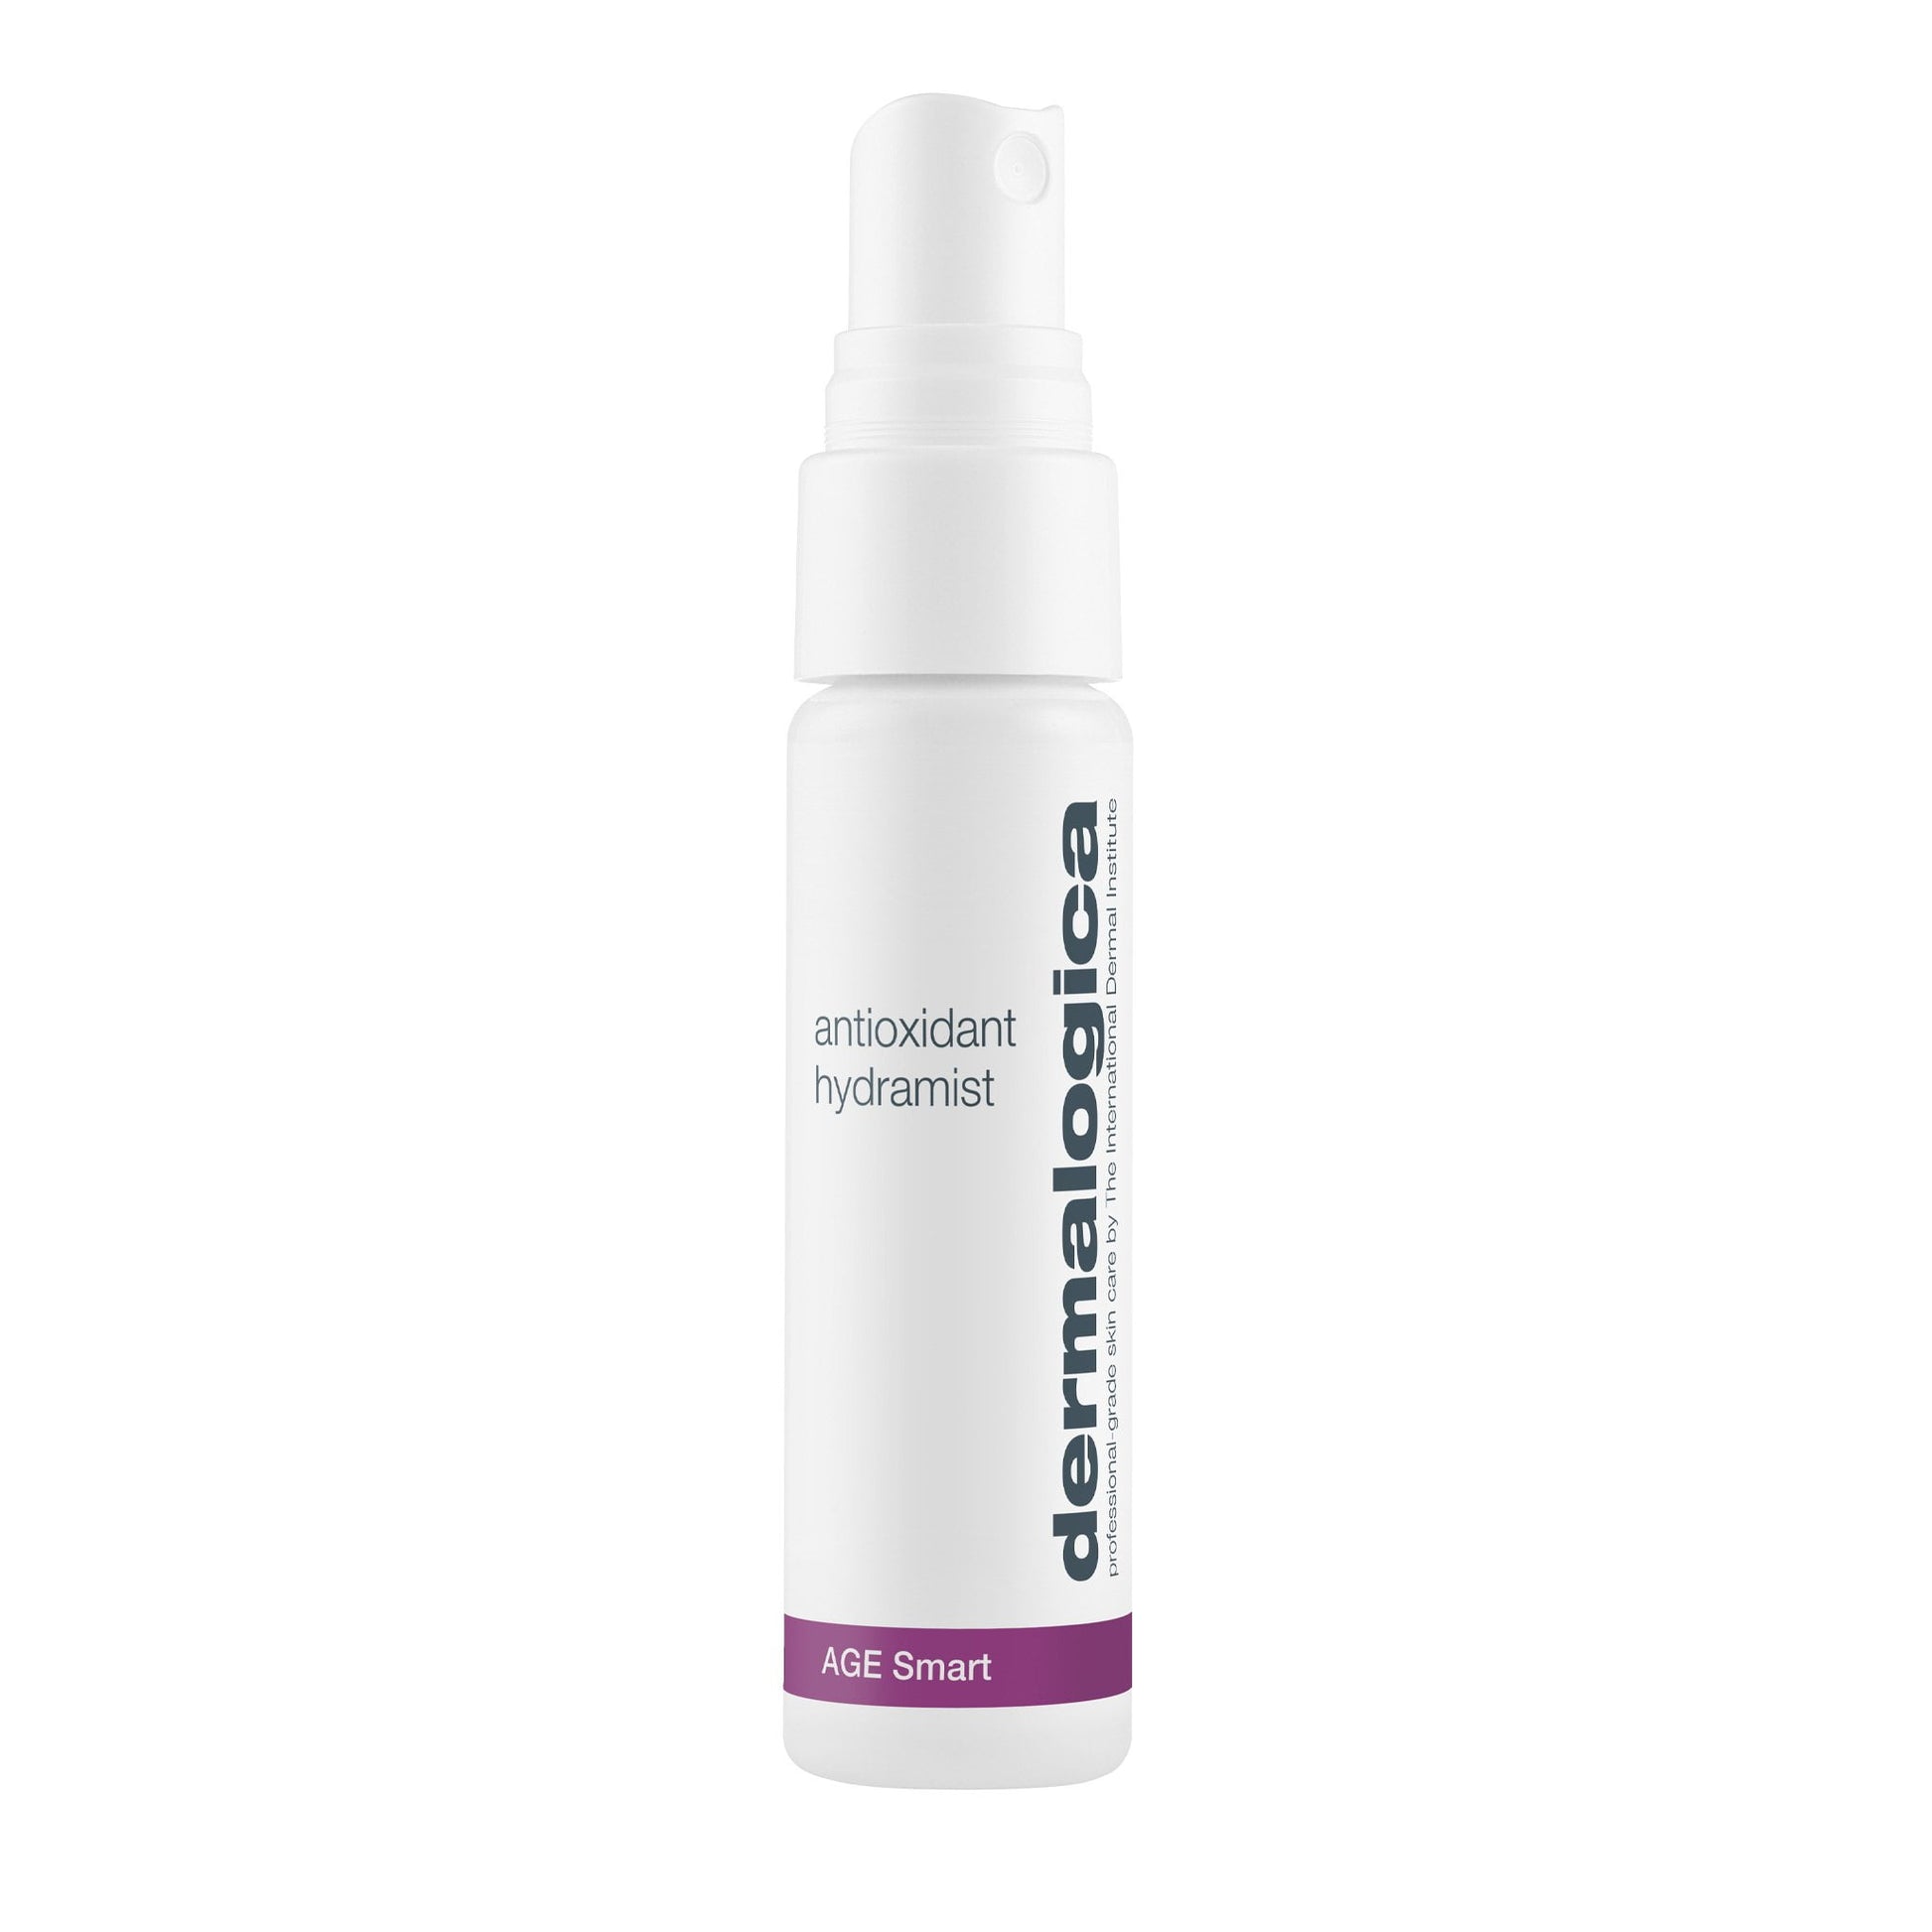 Antioxidant Firming Spray Toner, Anti-Aging Toner